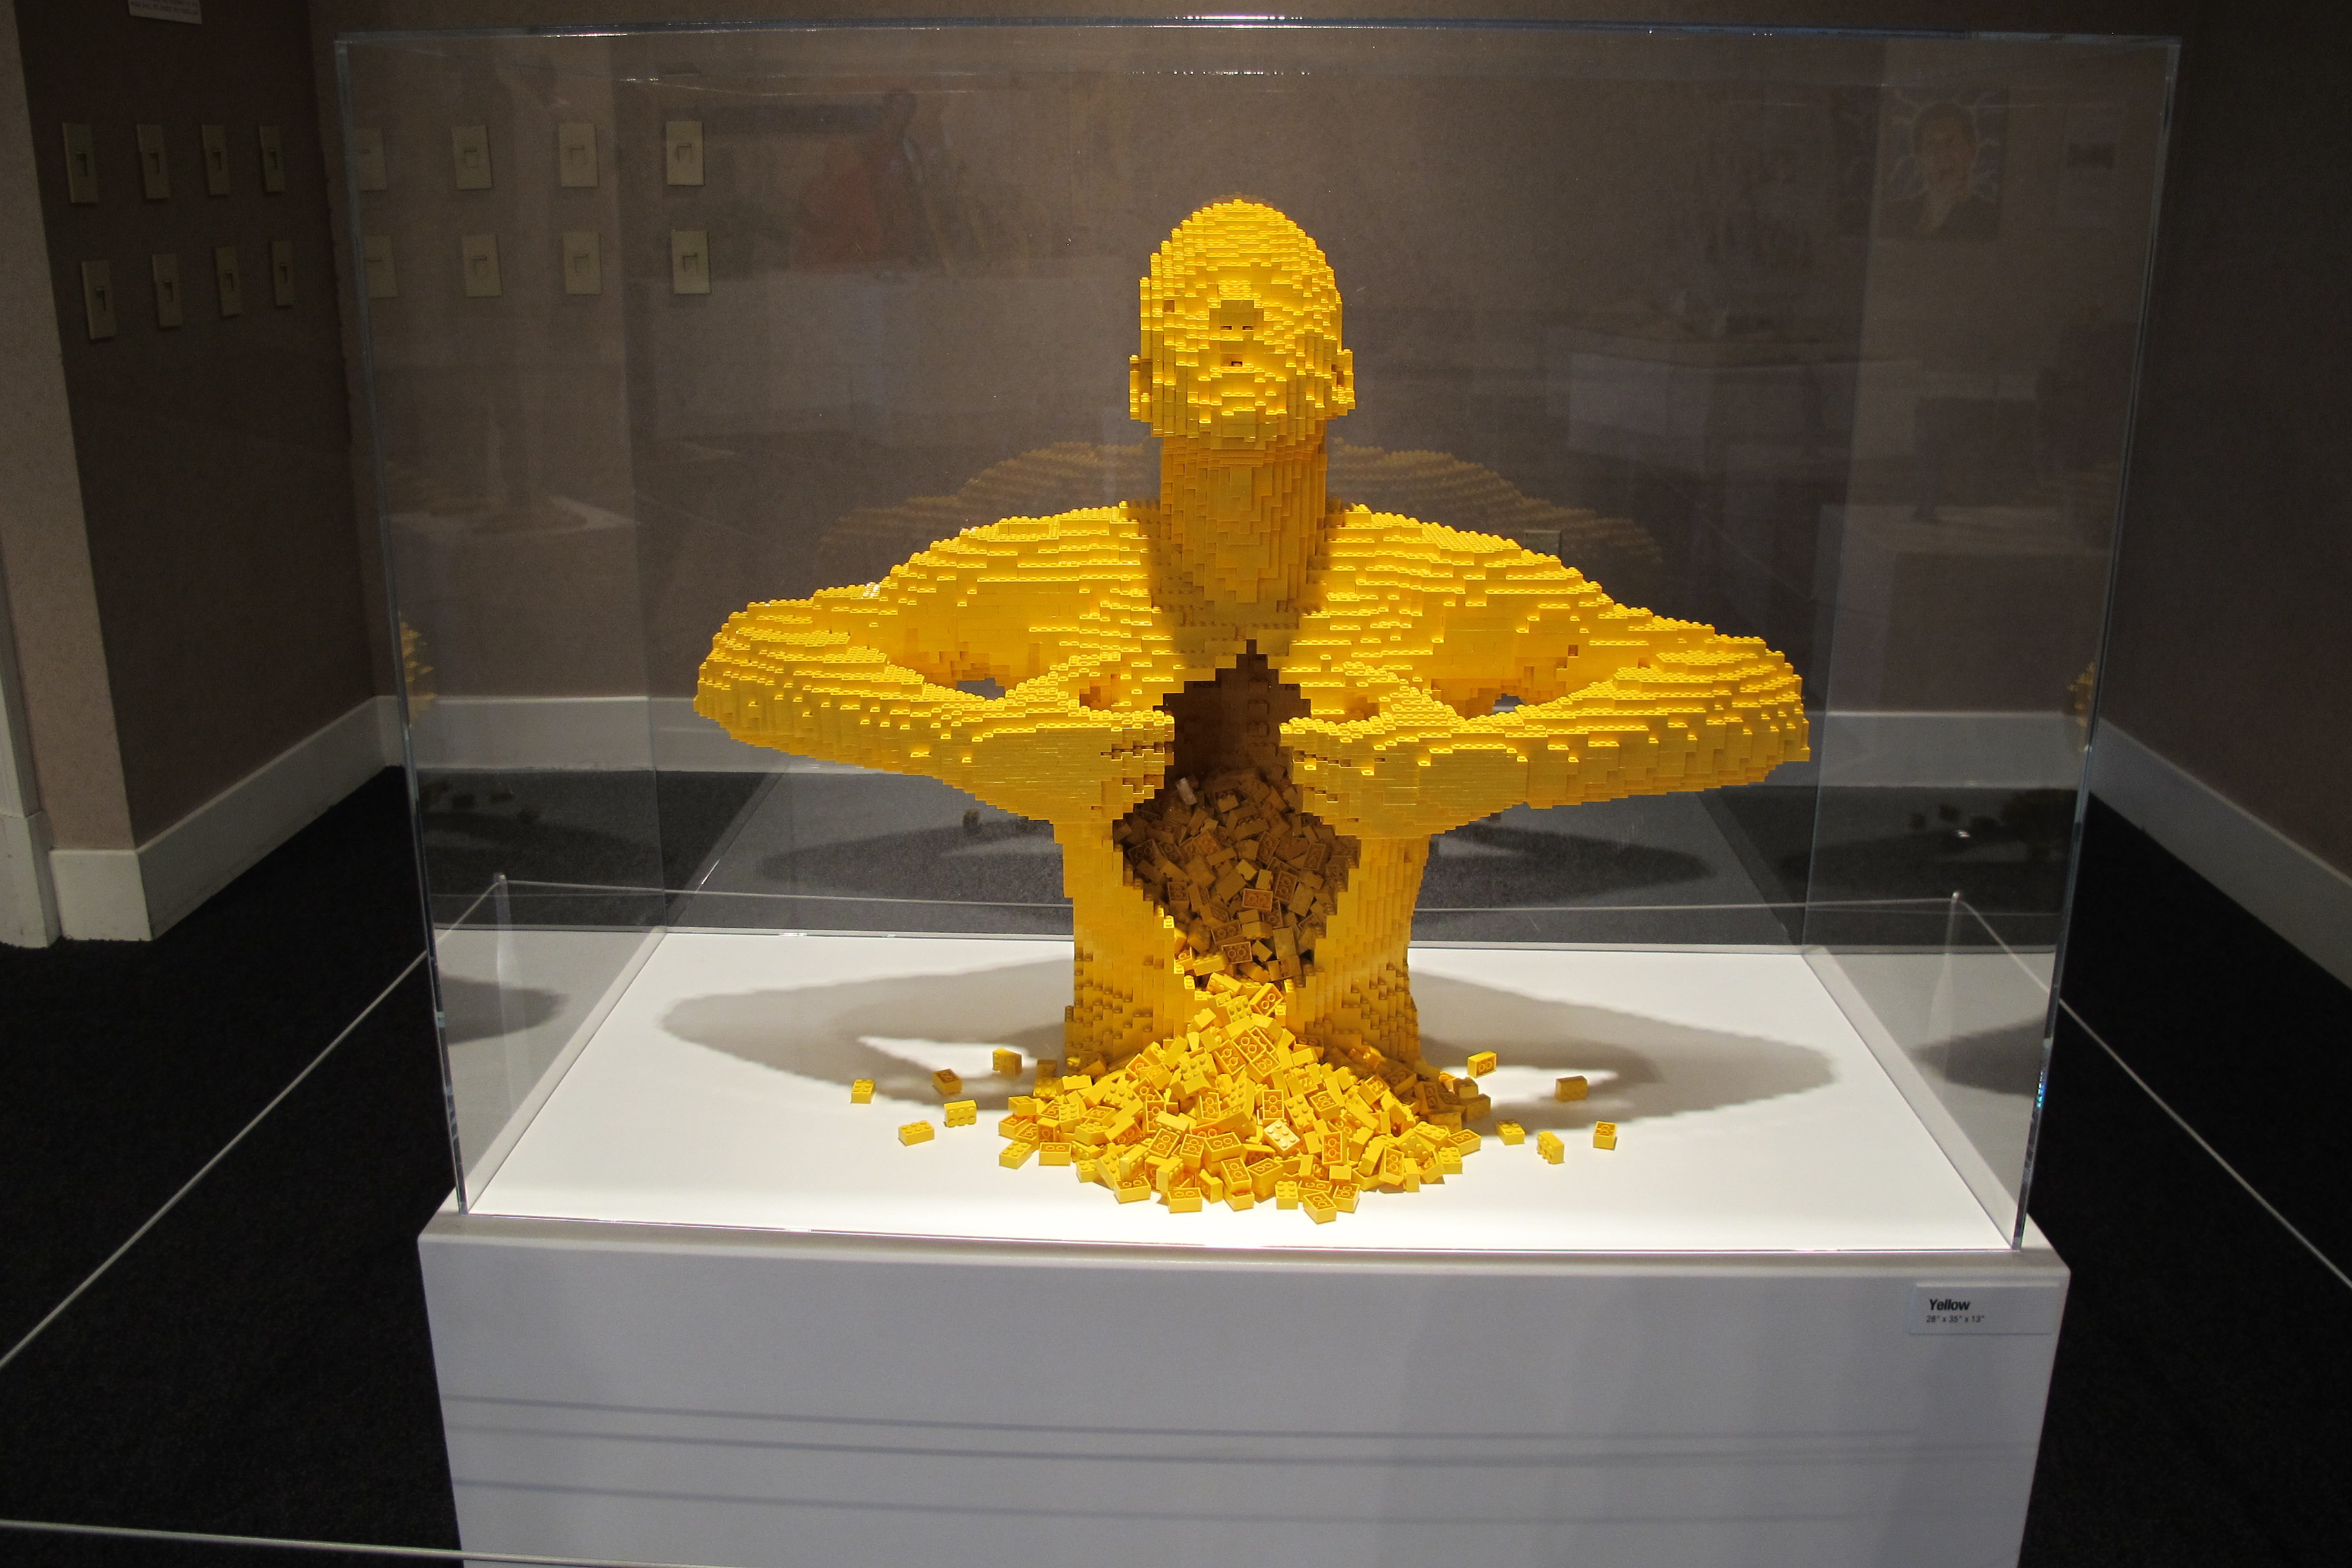 Bricking it: is Lego art?, Sculpture